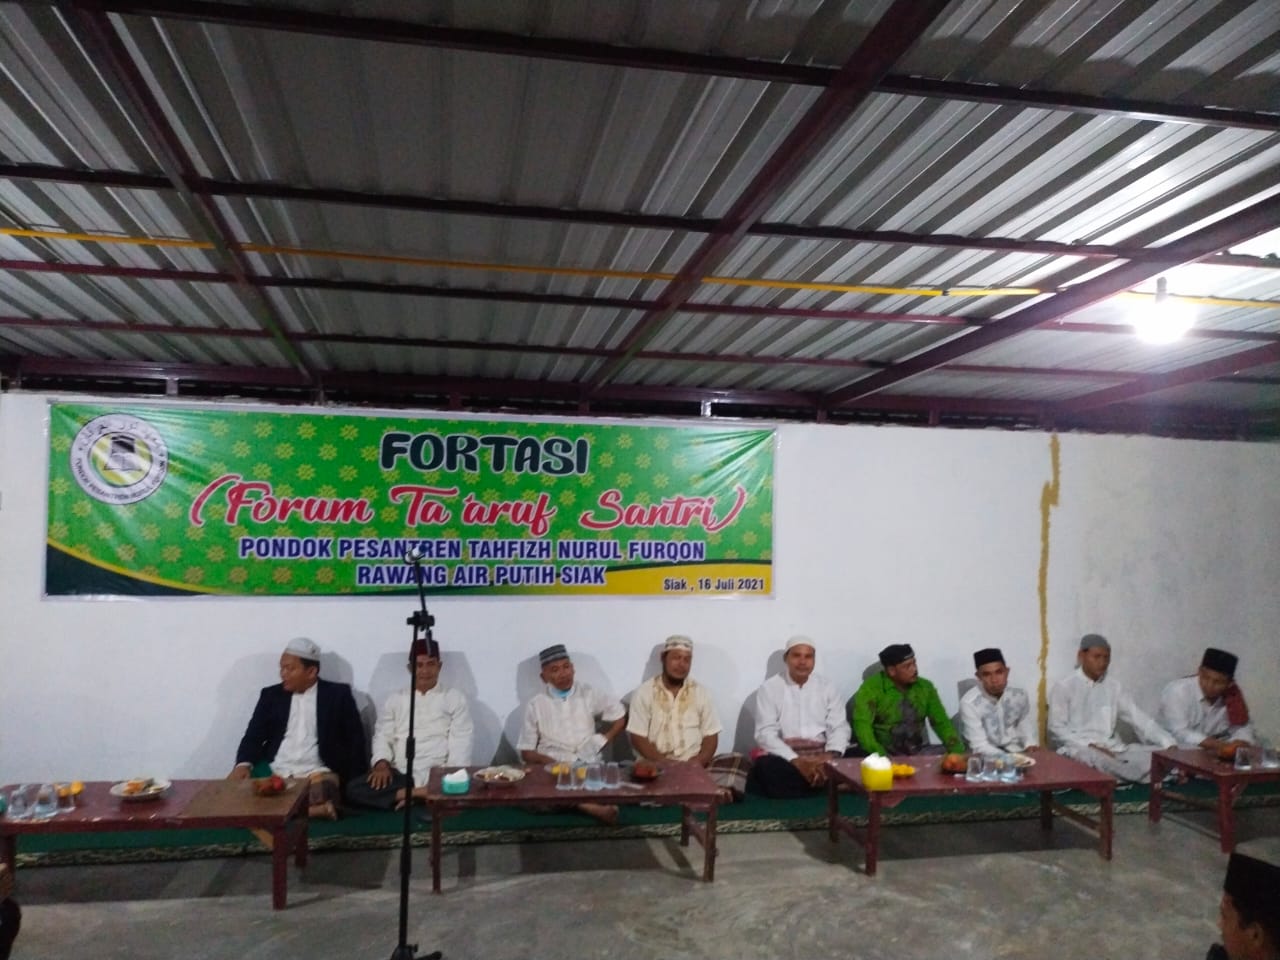 Fortasi 2021 Forum Taaruf Santri di Pondok Pesantren Tahfizh Nurul Furqon Siak